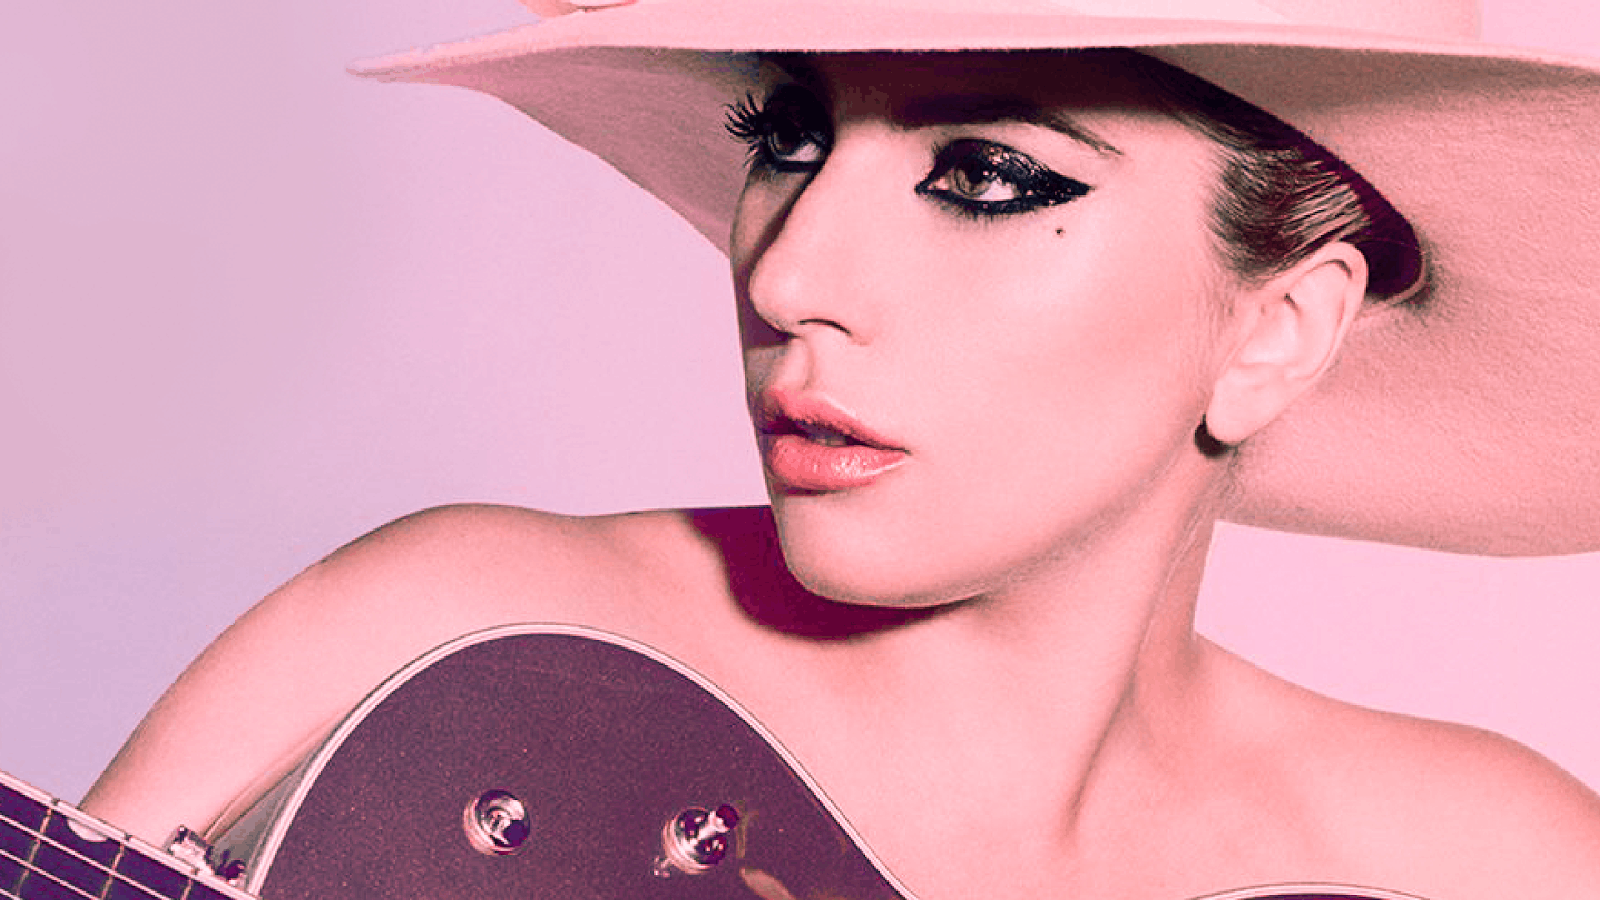 Joanne Lady Gaga Wallpapers - Top Free Joanne Lady Gaga Backgrounds ...